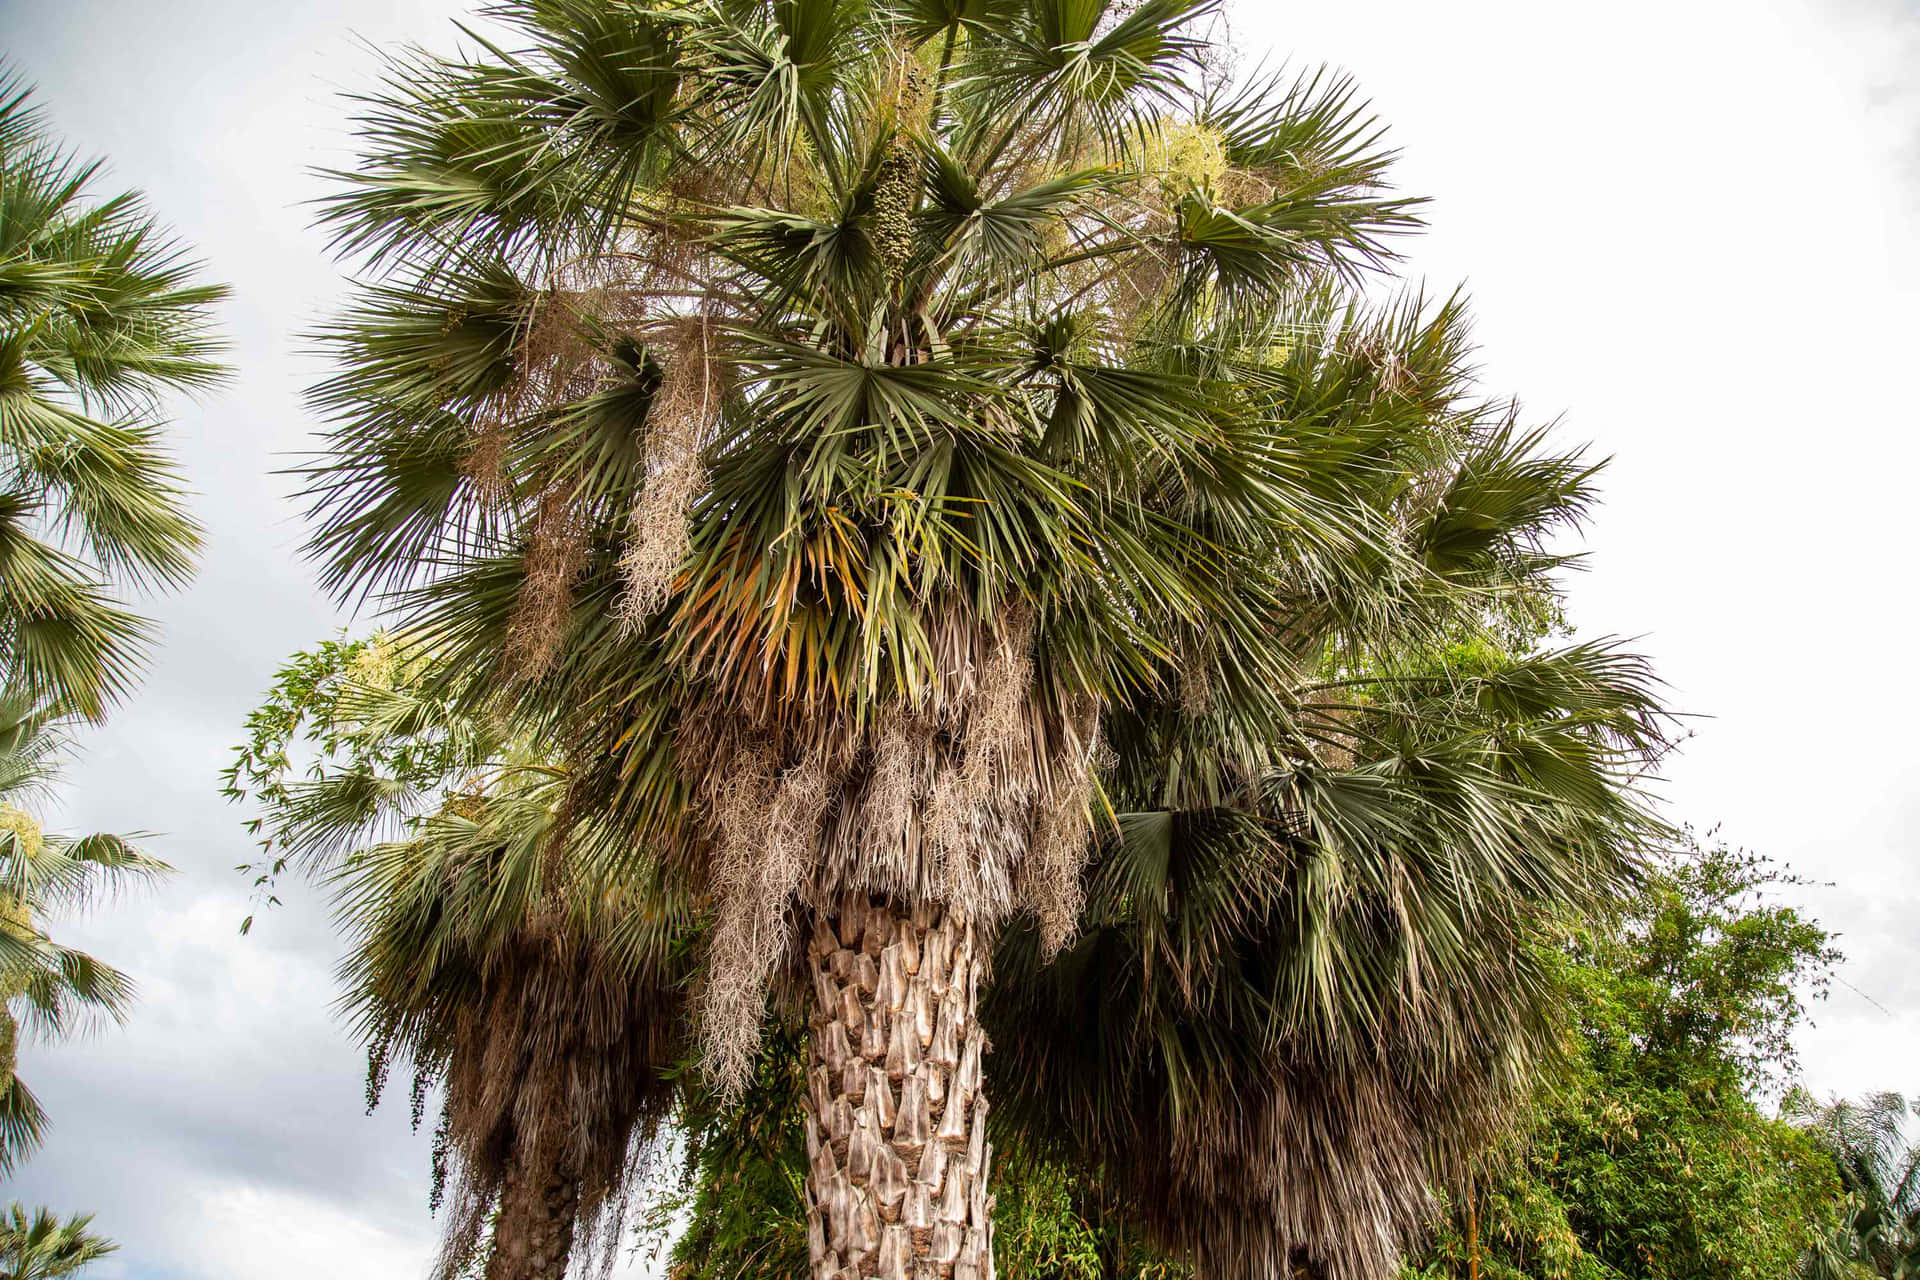 Enjoy the beauty of soaring palm trees